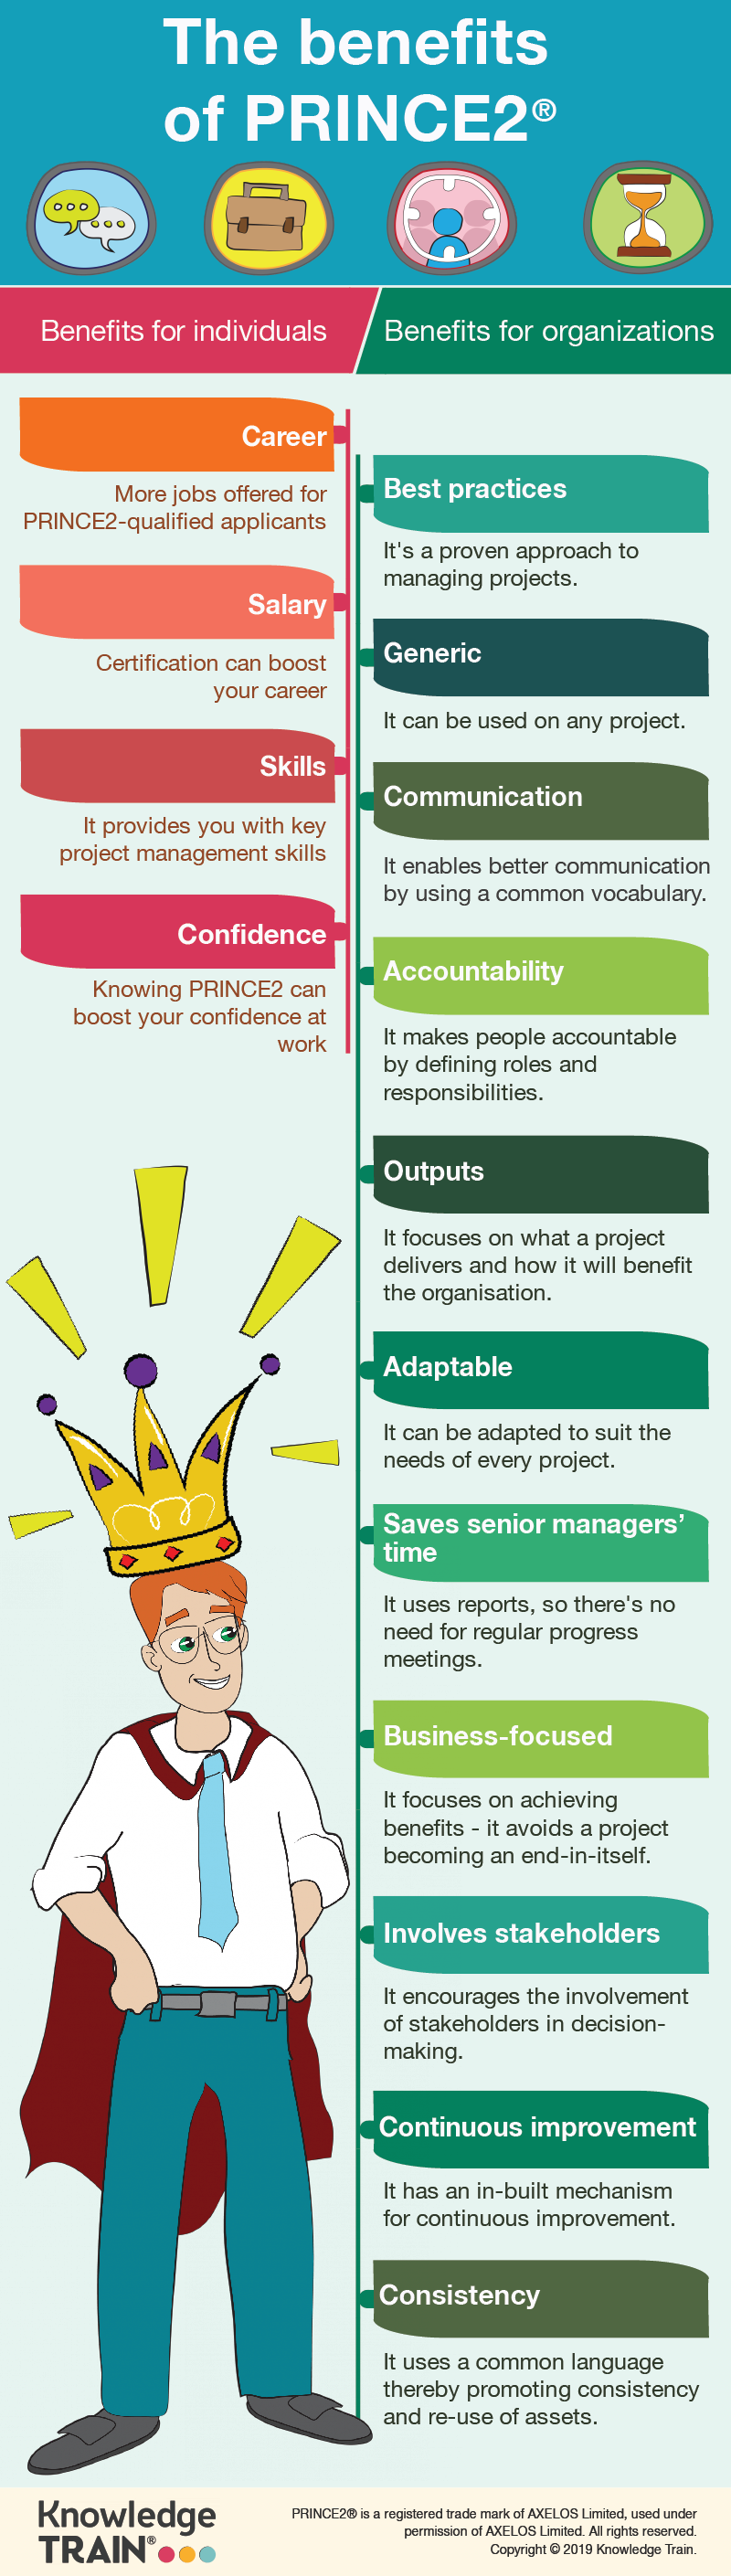 PRINCE2 benefits infographic